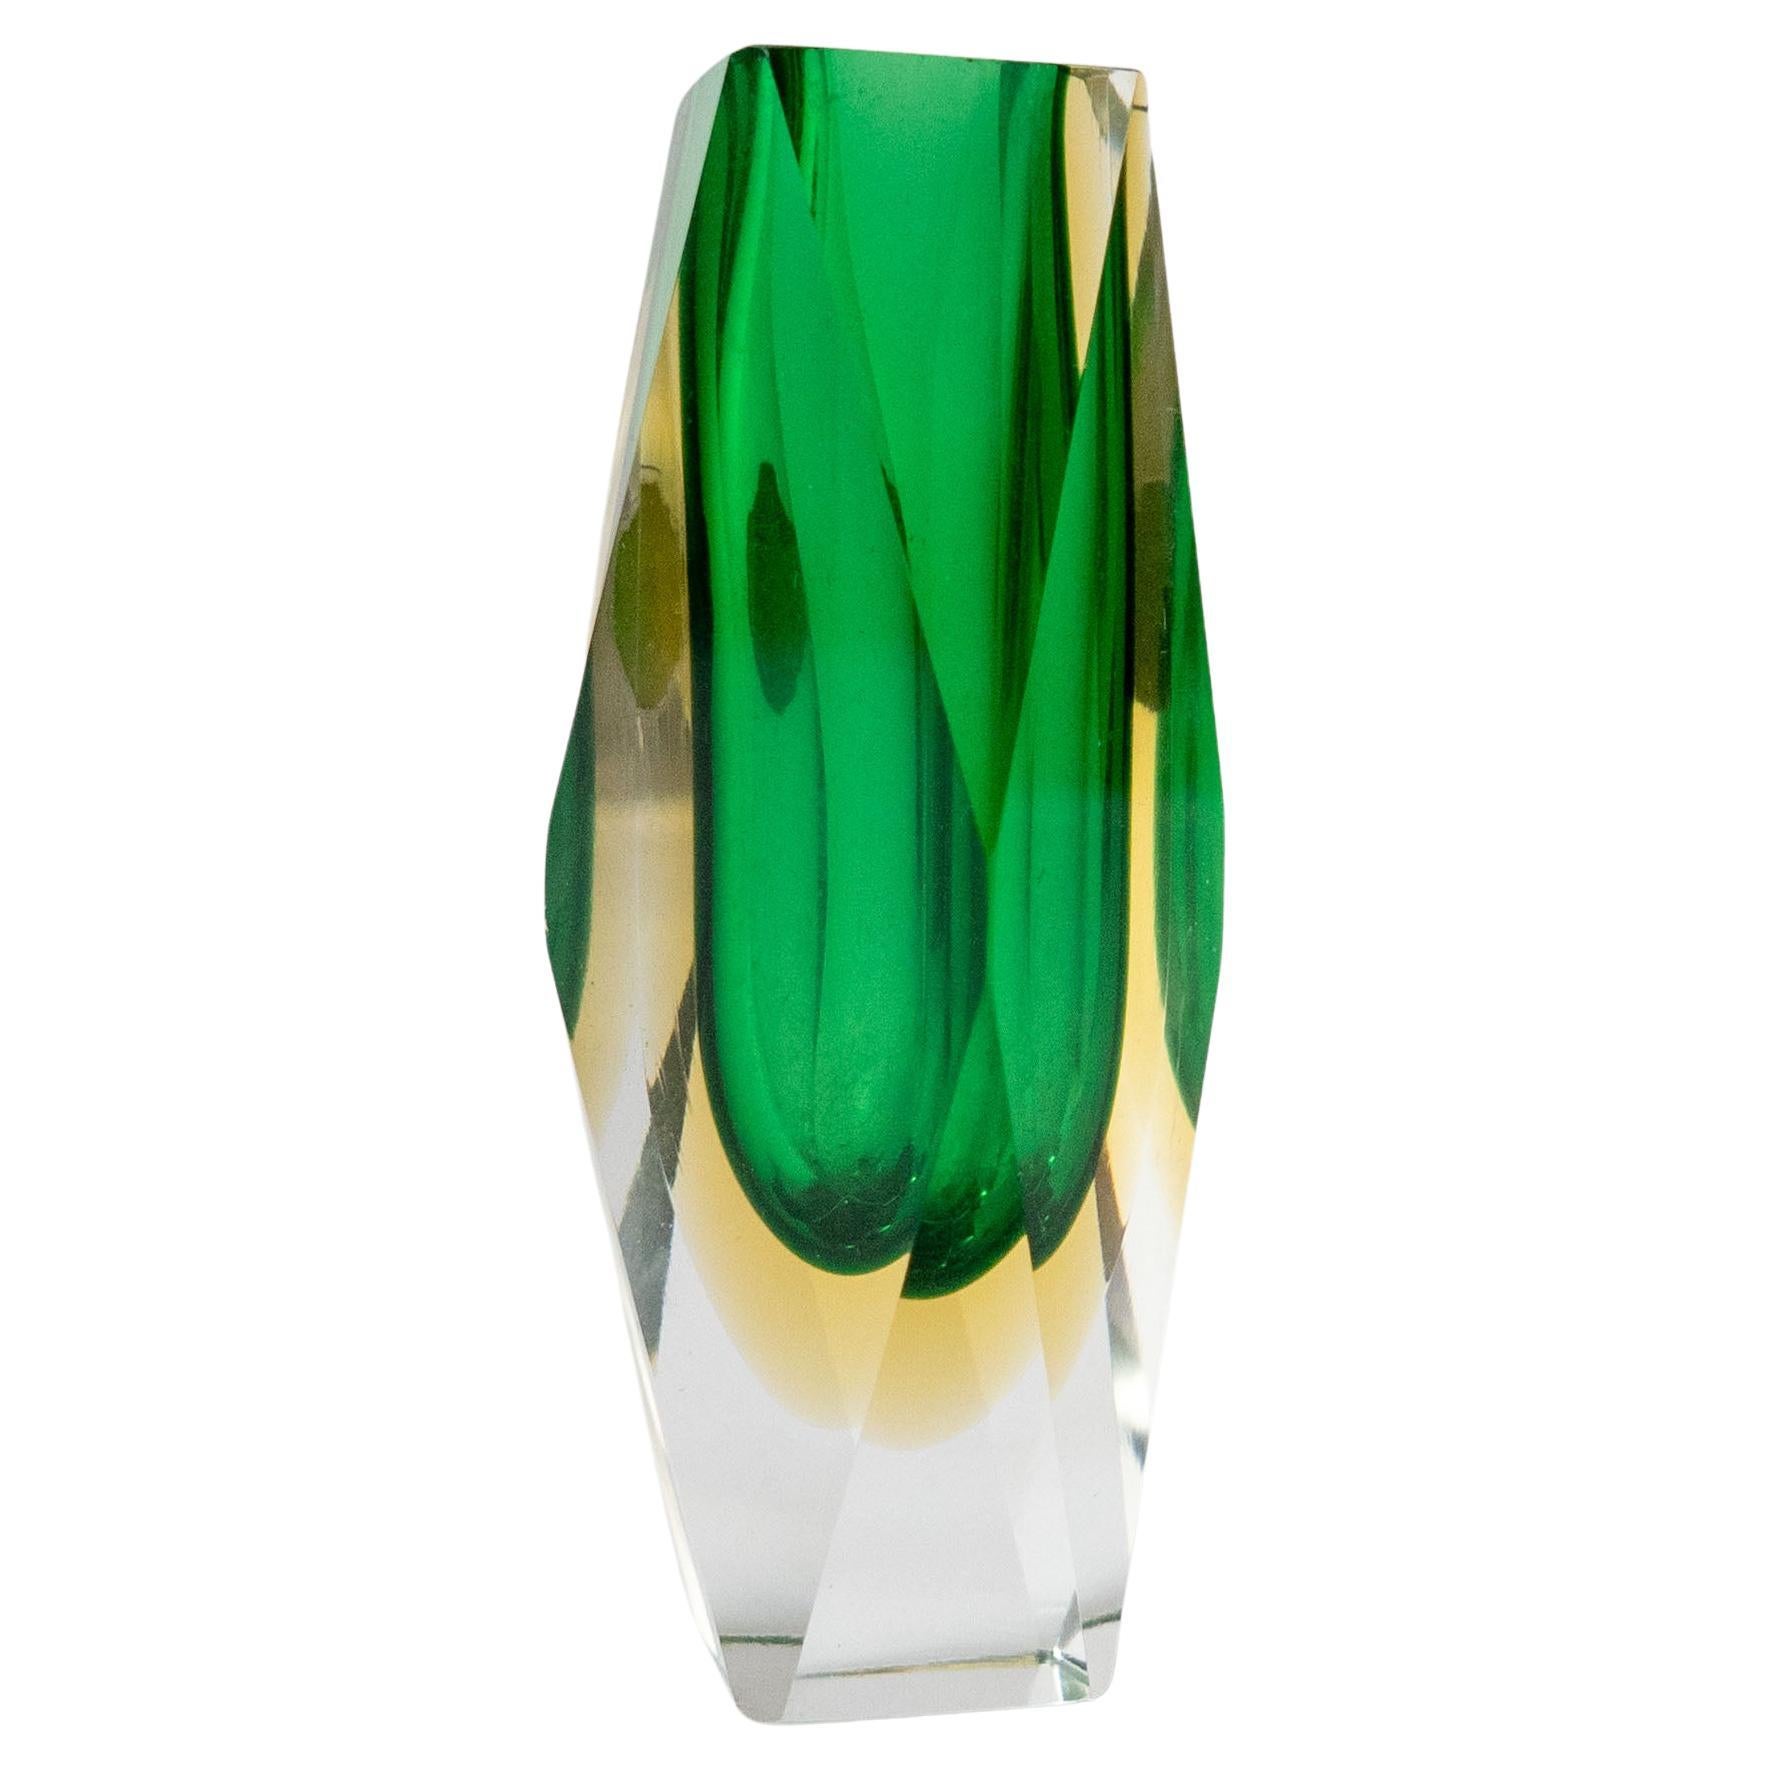 Vintage NOS Vase in Massive Green "Sommerso" Murano Glass, Flavio Poli Style